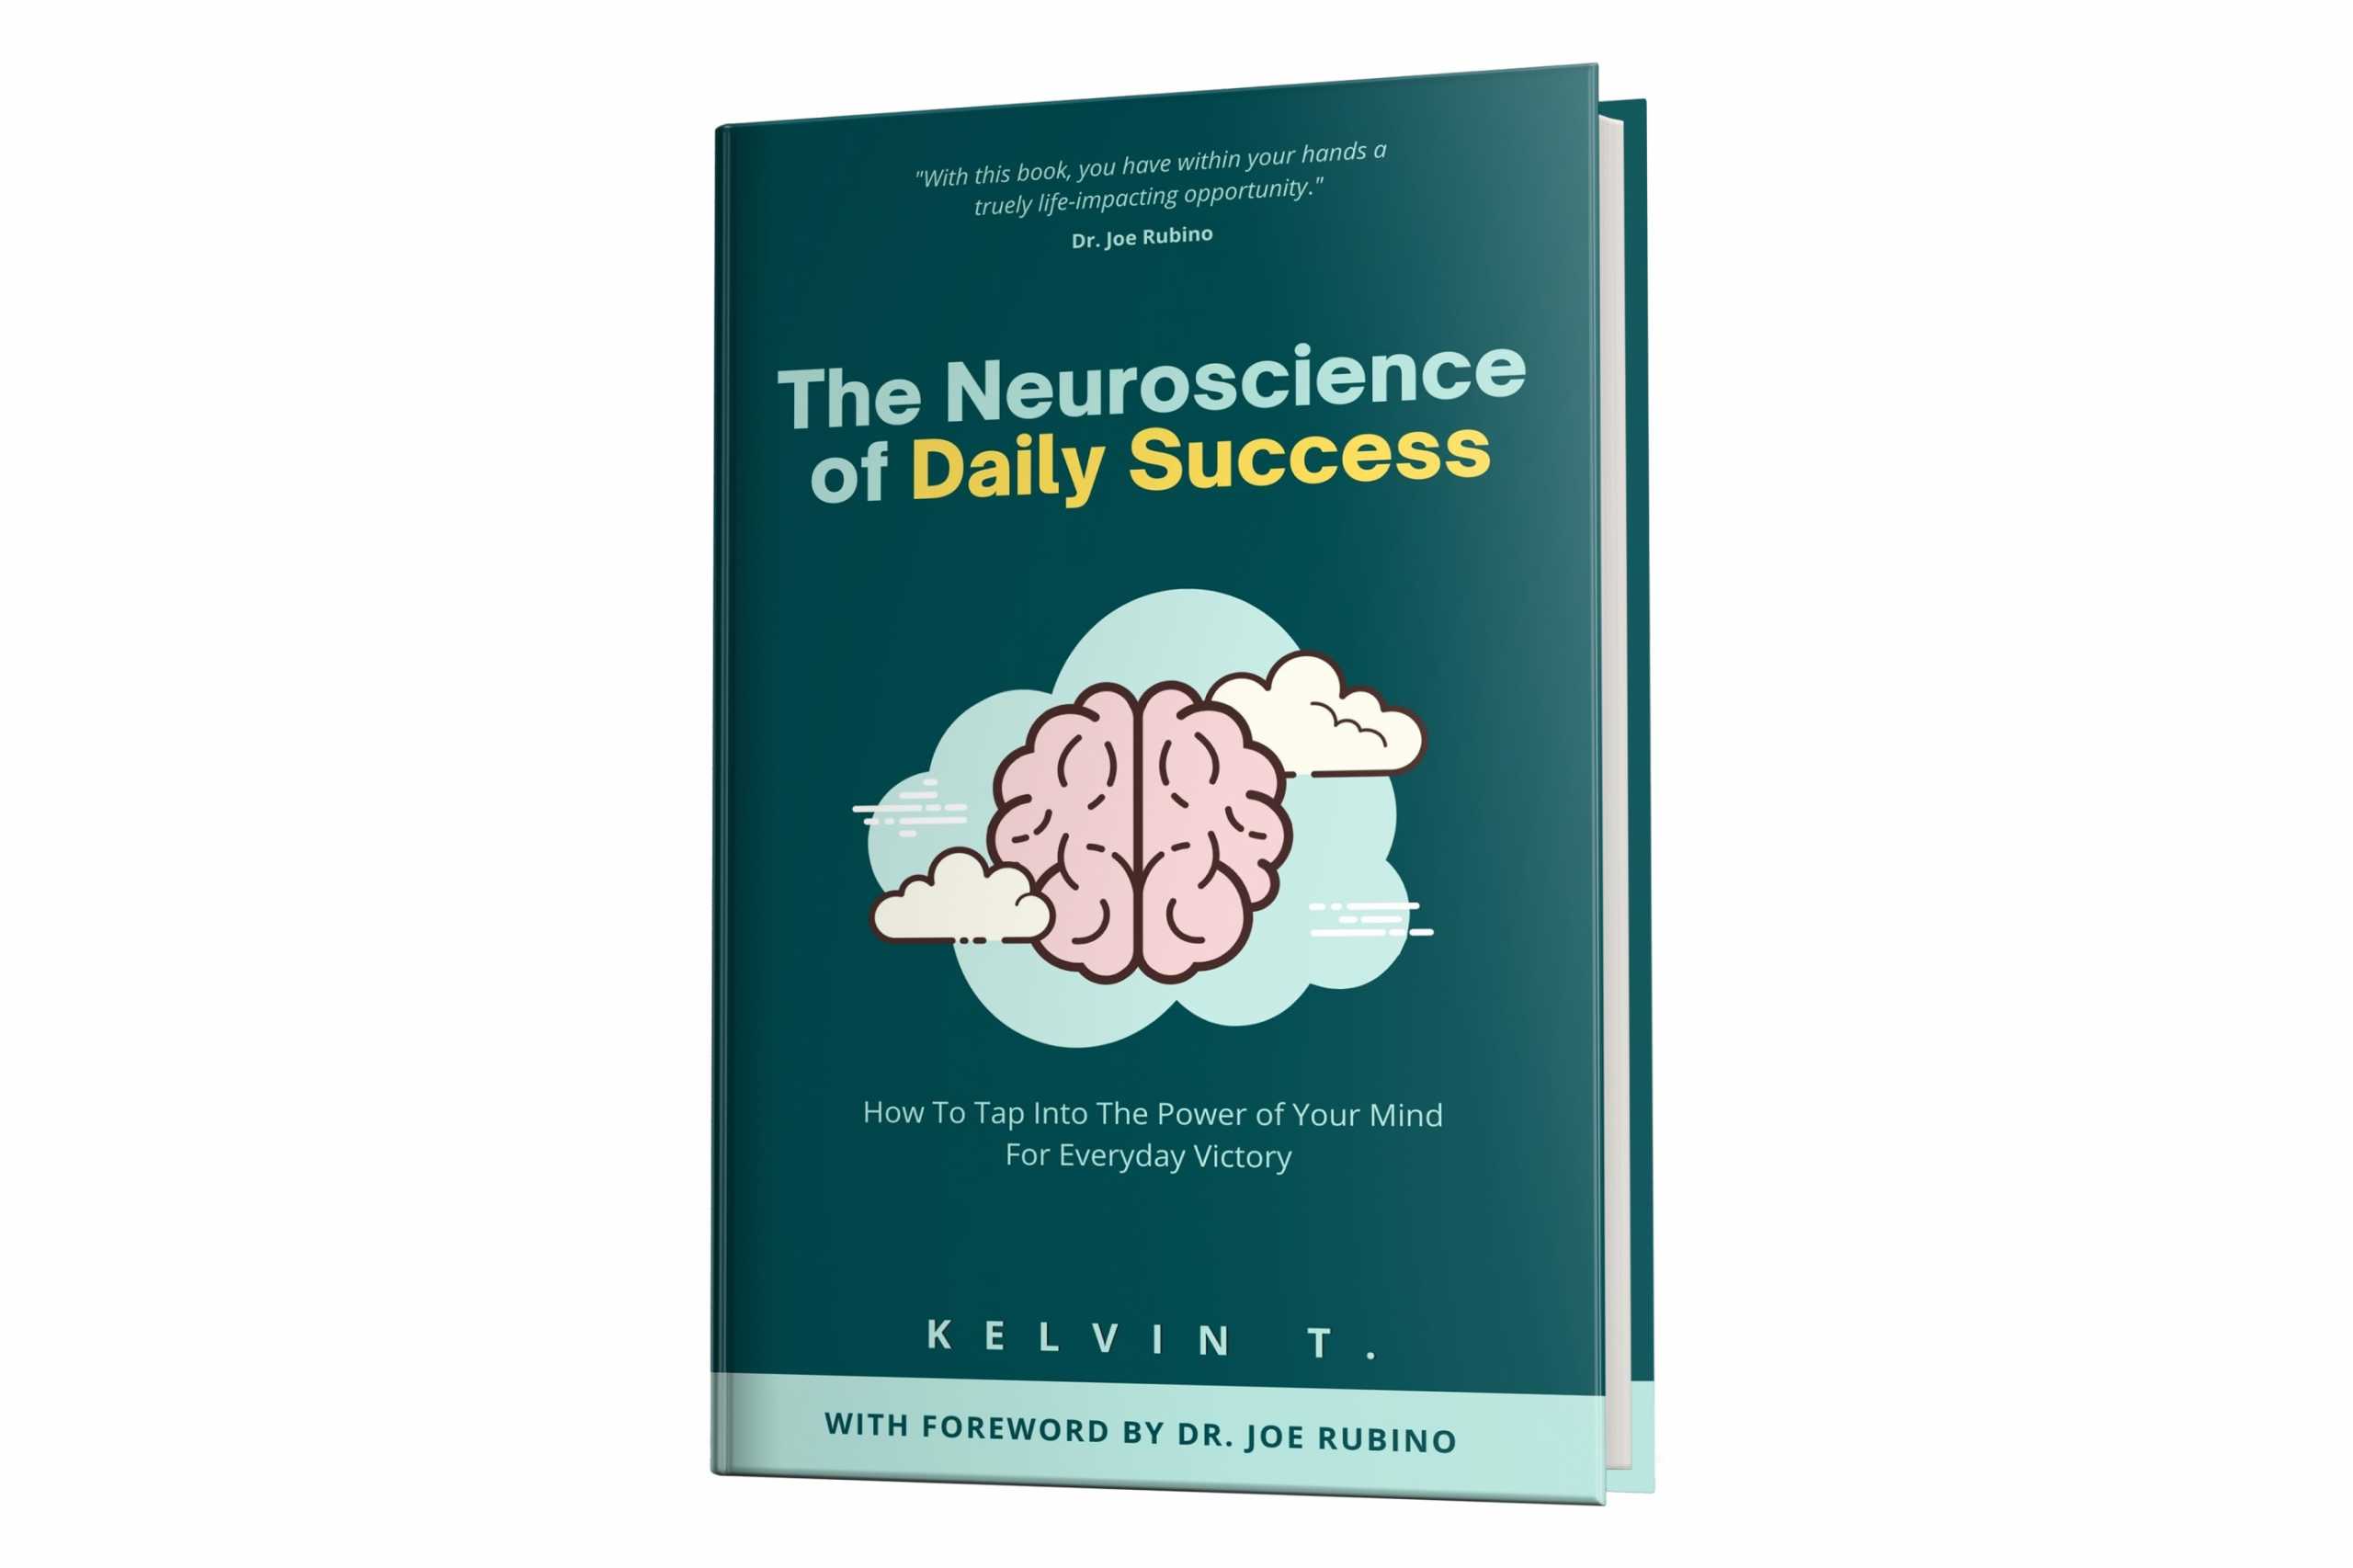 The Neuroscience of Daily Success